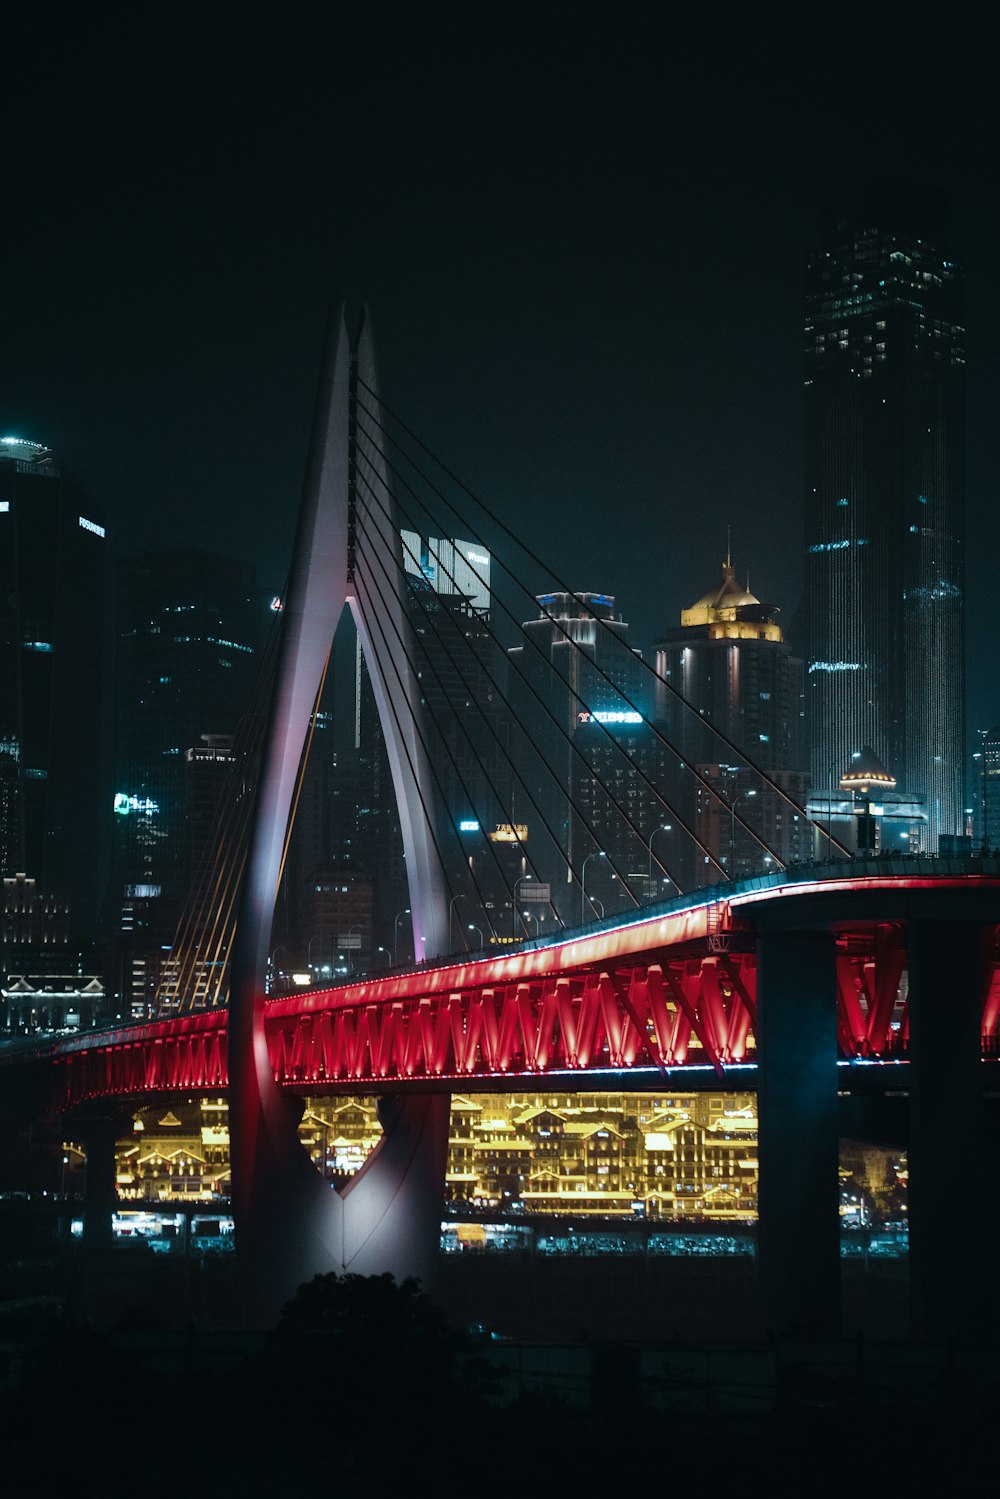 Red bridge over body of water during night time photo – Free Chongqing  Image on Unsplash